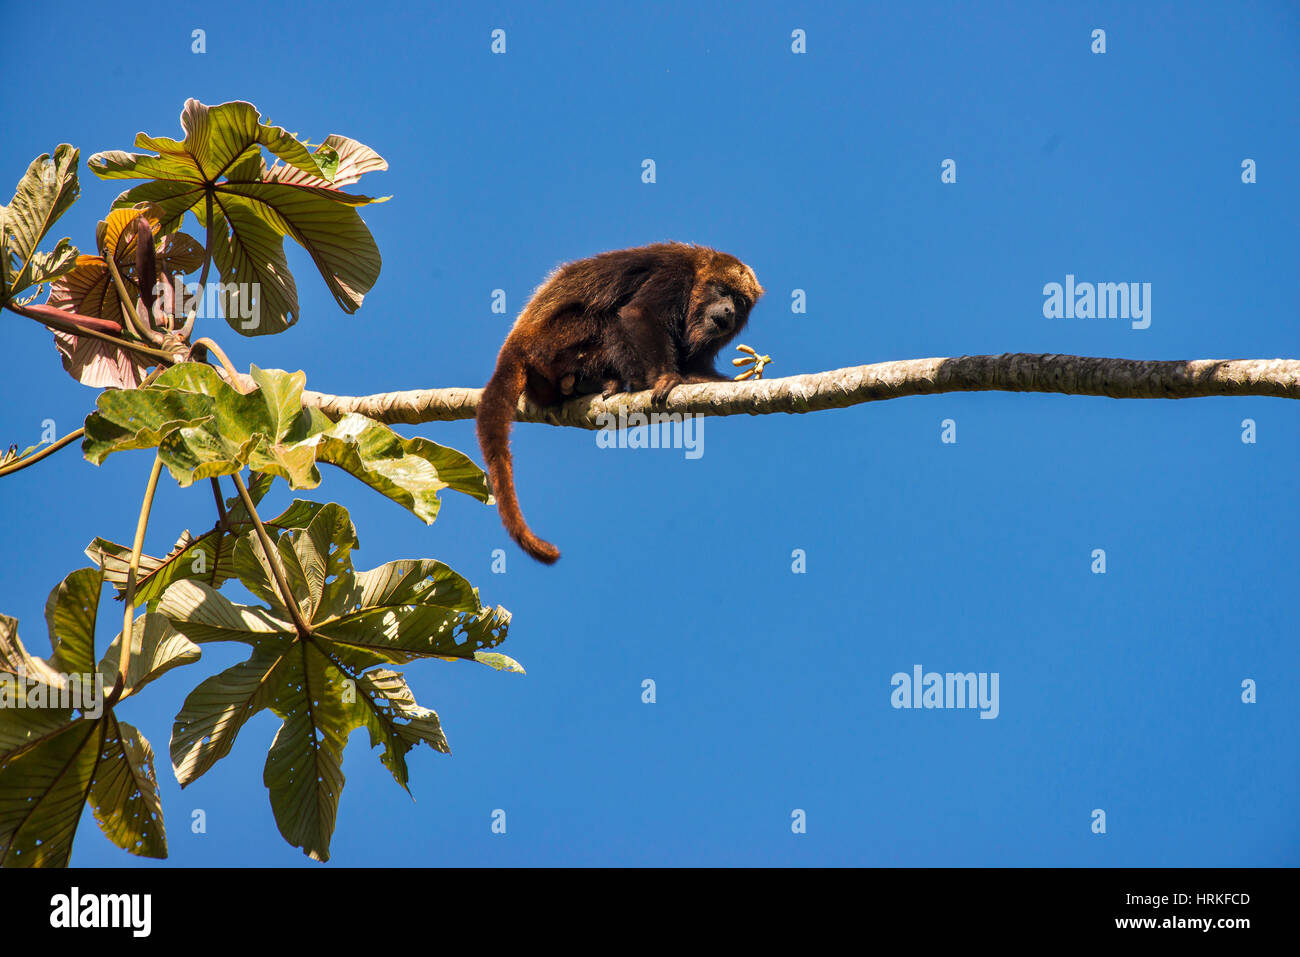 Brown howler monkey (Alouatta guariba), photographed in Santa Maria de Jetibá, Espírito Santo - Brazil. Atlantic forest Biome. Wild animal. Stock Photo